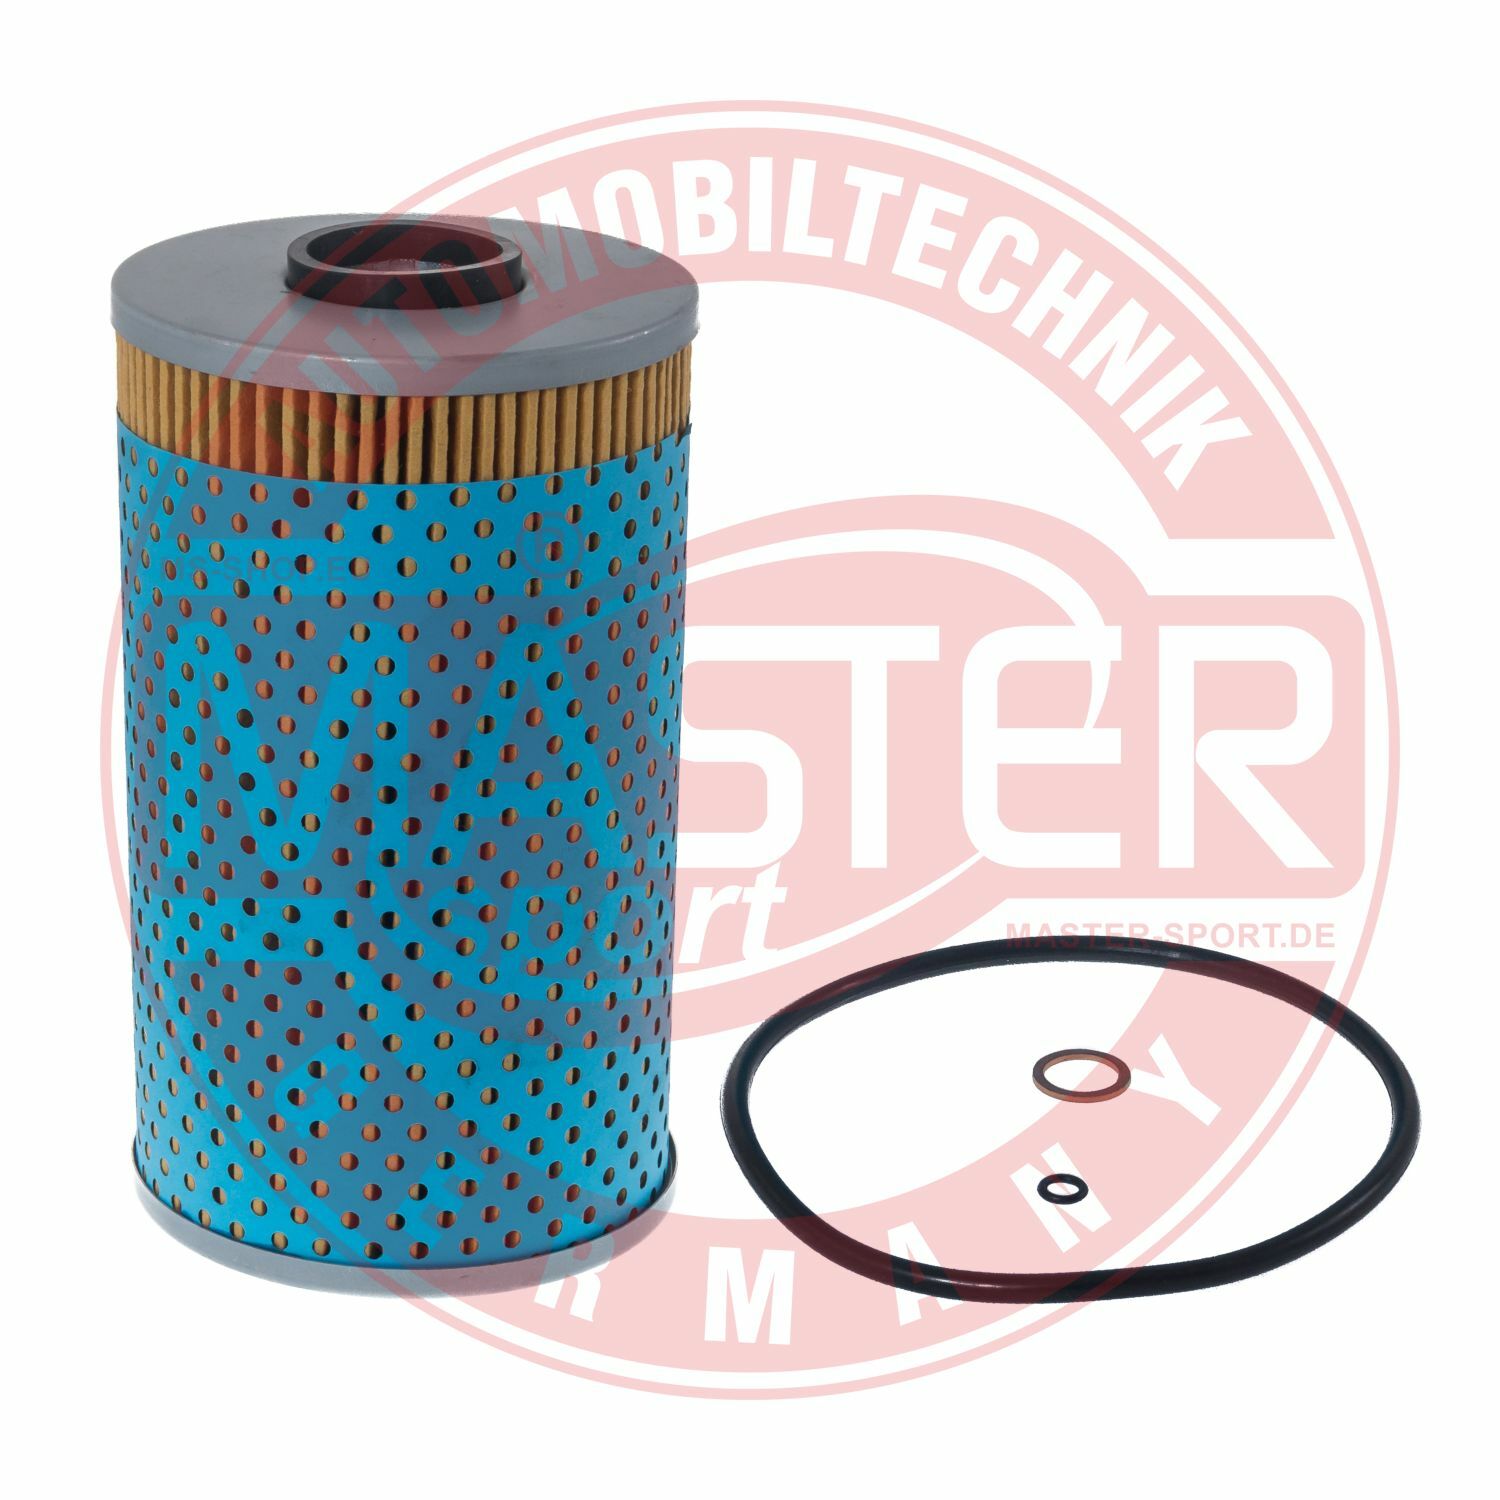 Olejový filter MASTER-SPORT GERMANY